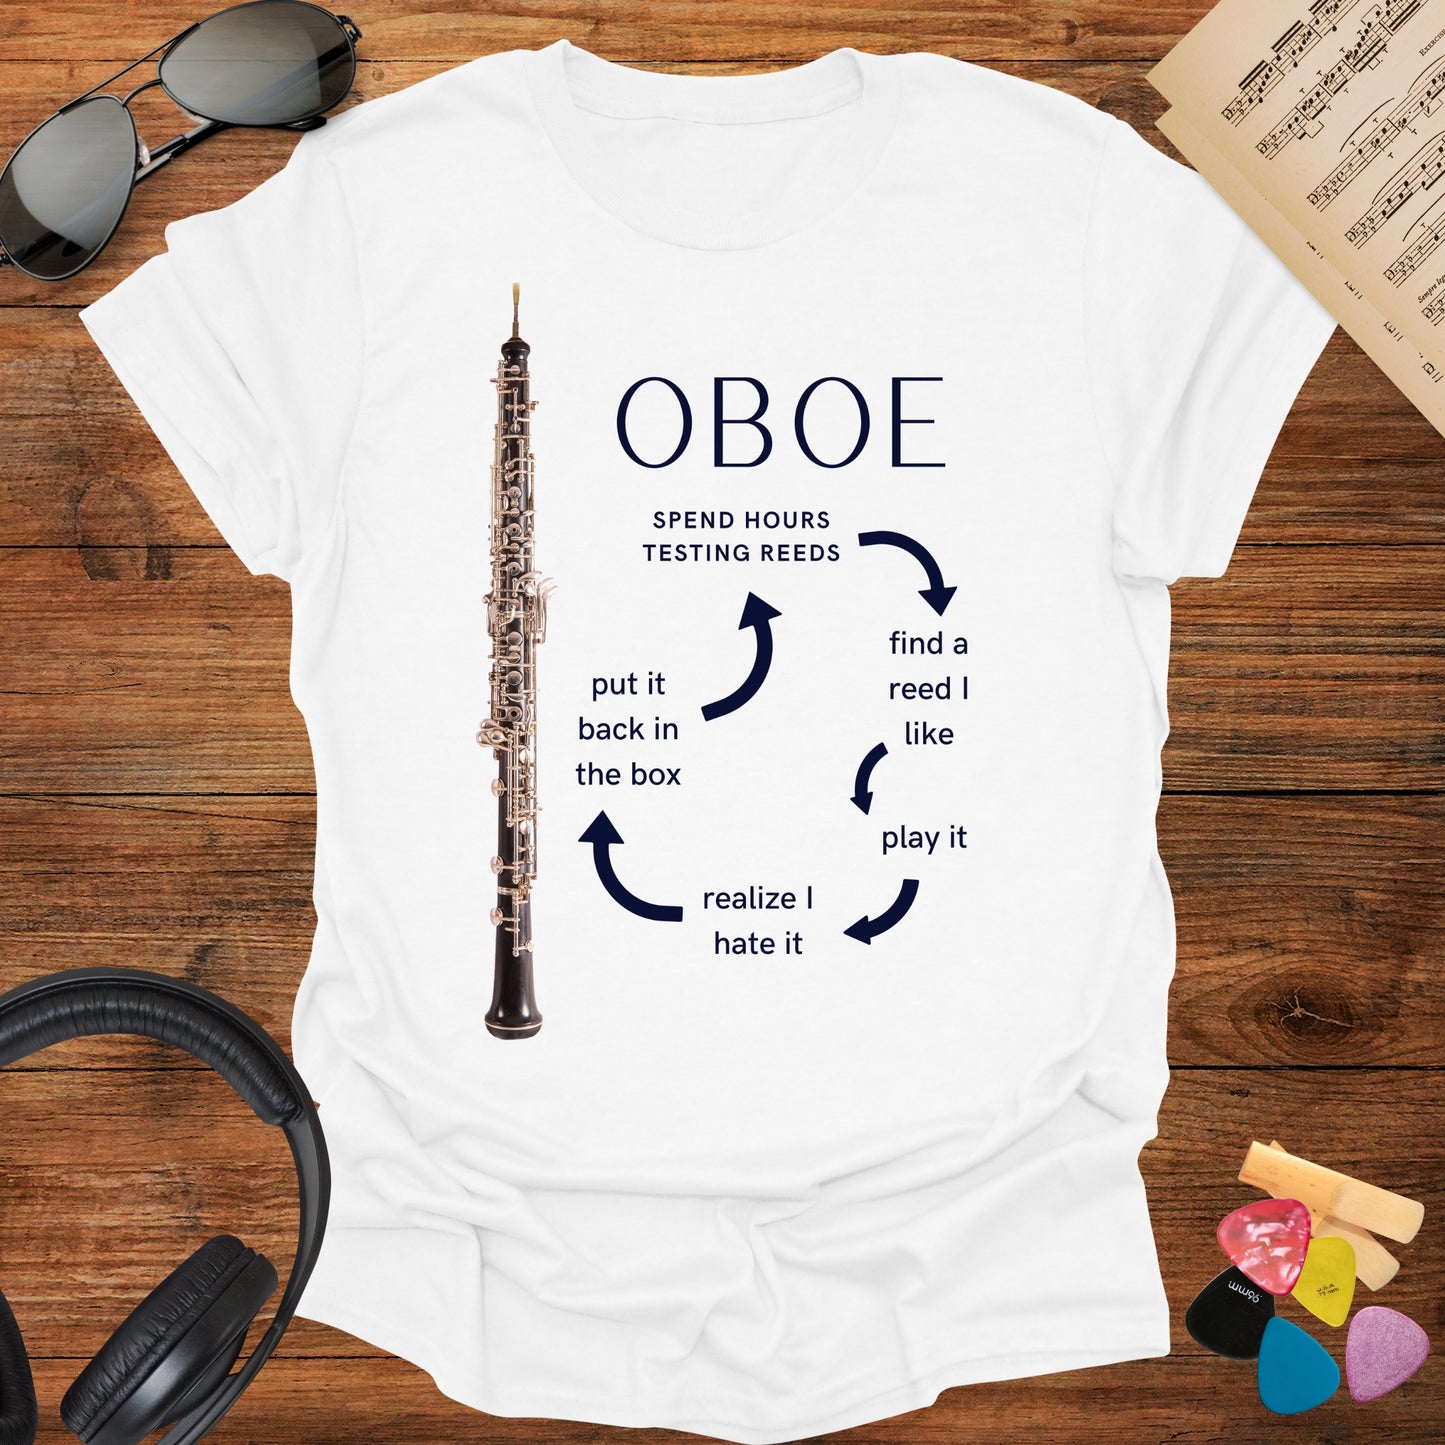 Oboe T-Shirt